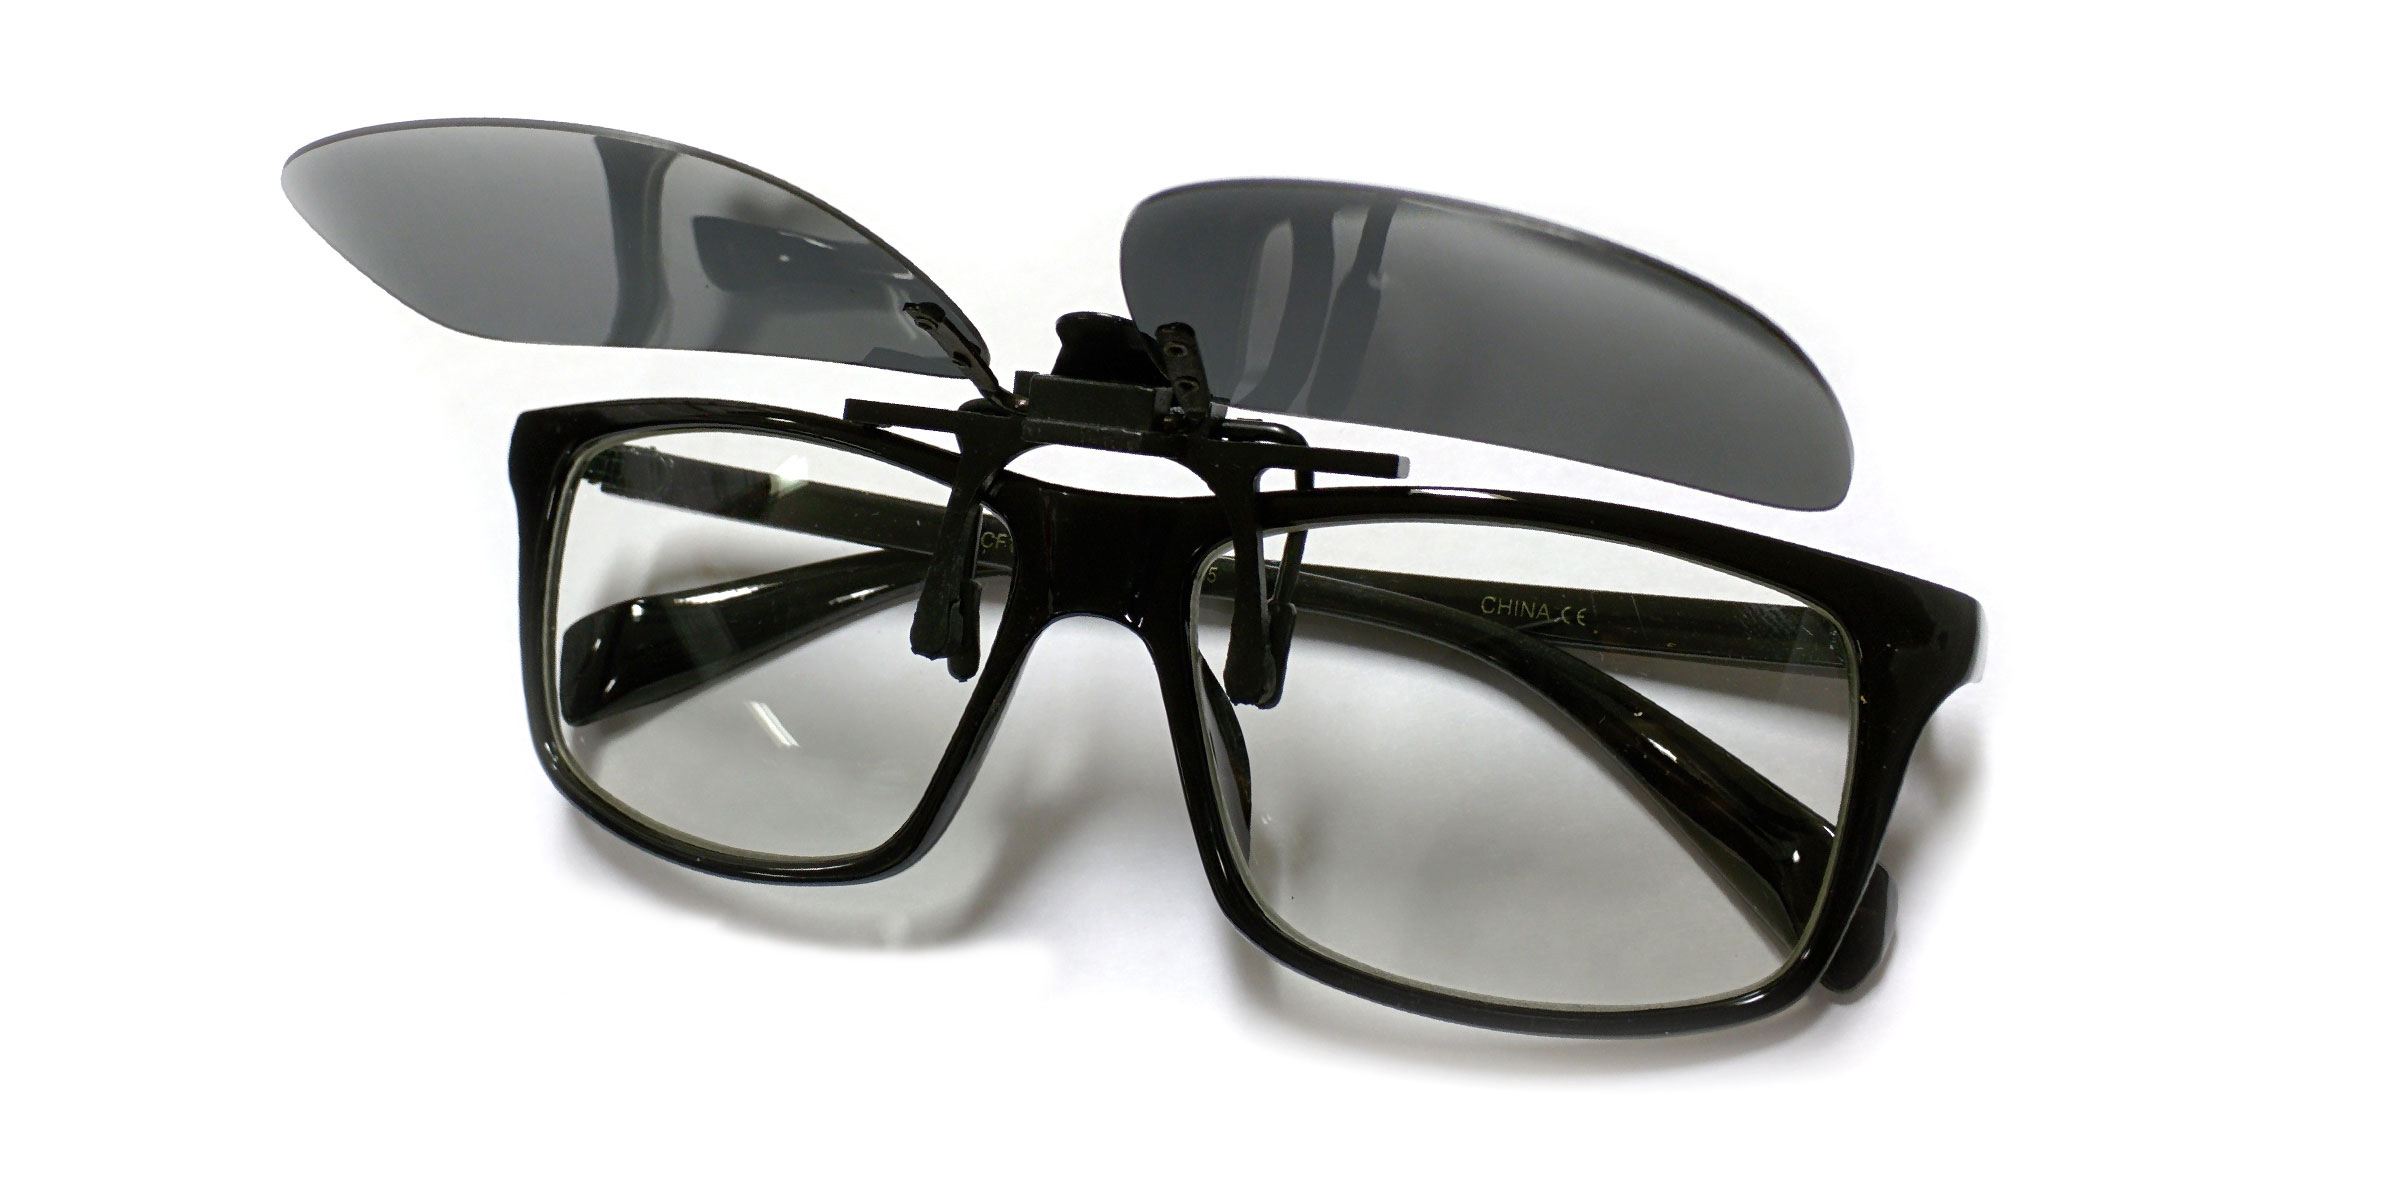 Newbee Fashion - Polarized Clip-On Flip Up Metal Clip Sunglasses Multi Purpose Flash Polarized Lenses (Glasses not included) - image 3 of 3